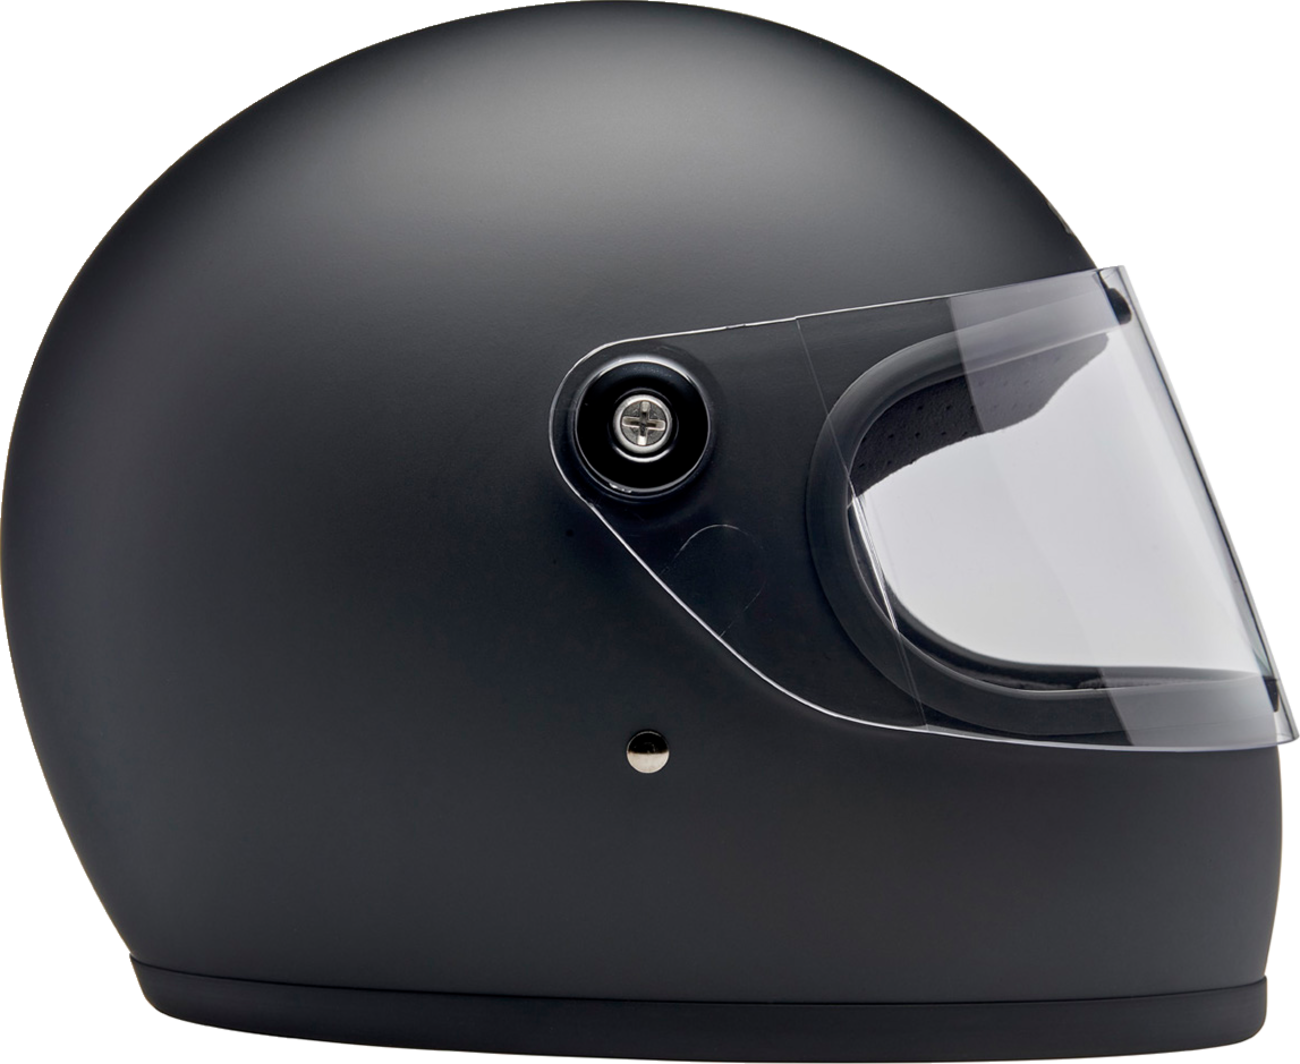 BILTWELL Gringo S Helmet - Flat Black - XL 1003-201-505